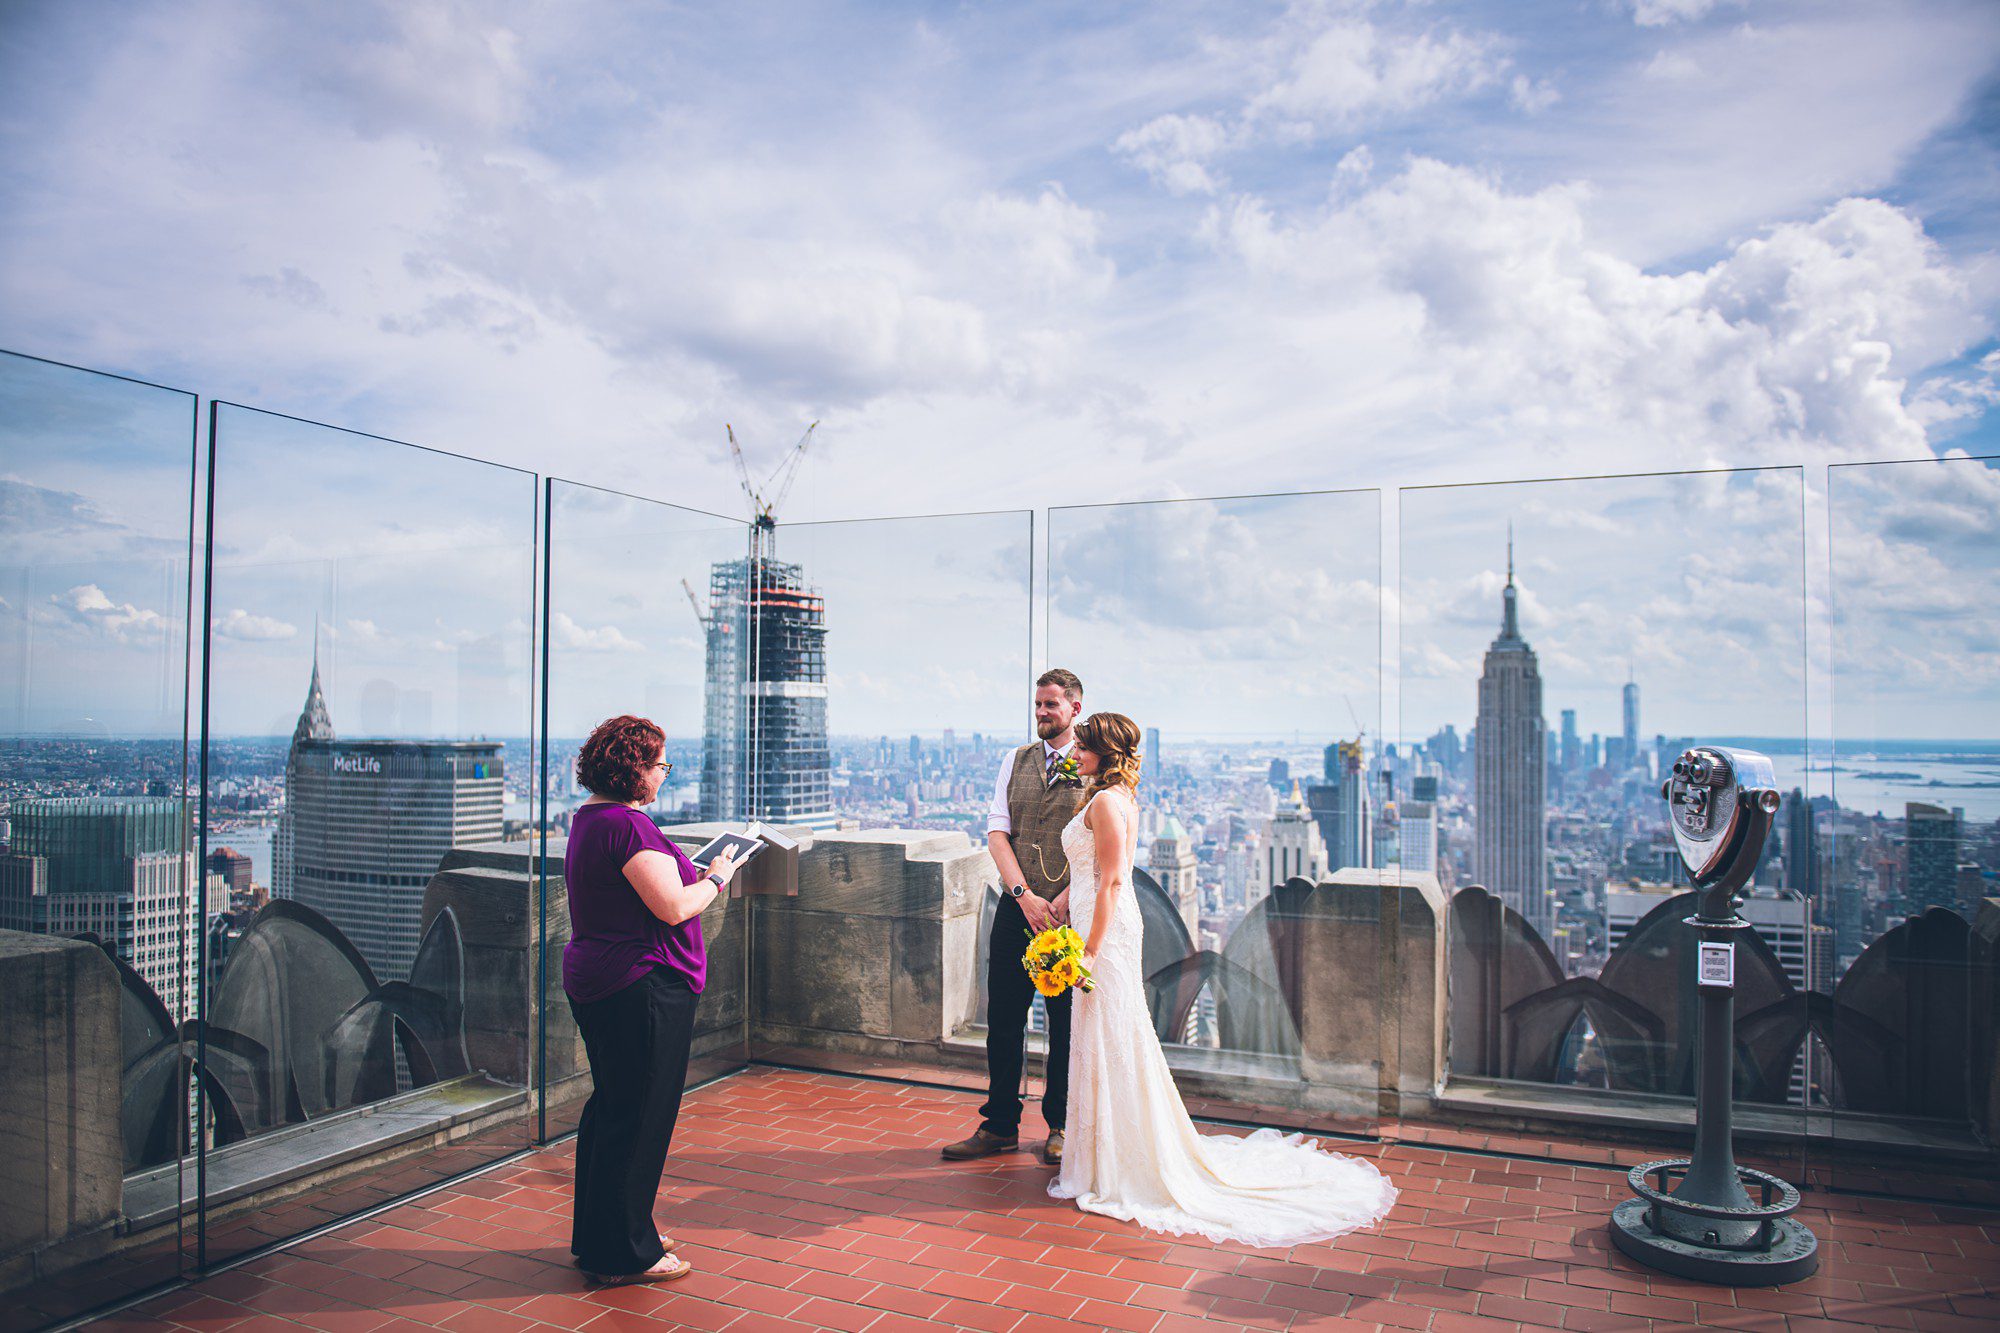 Top wedding locations in New York City